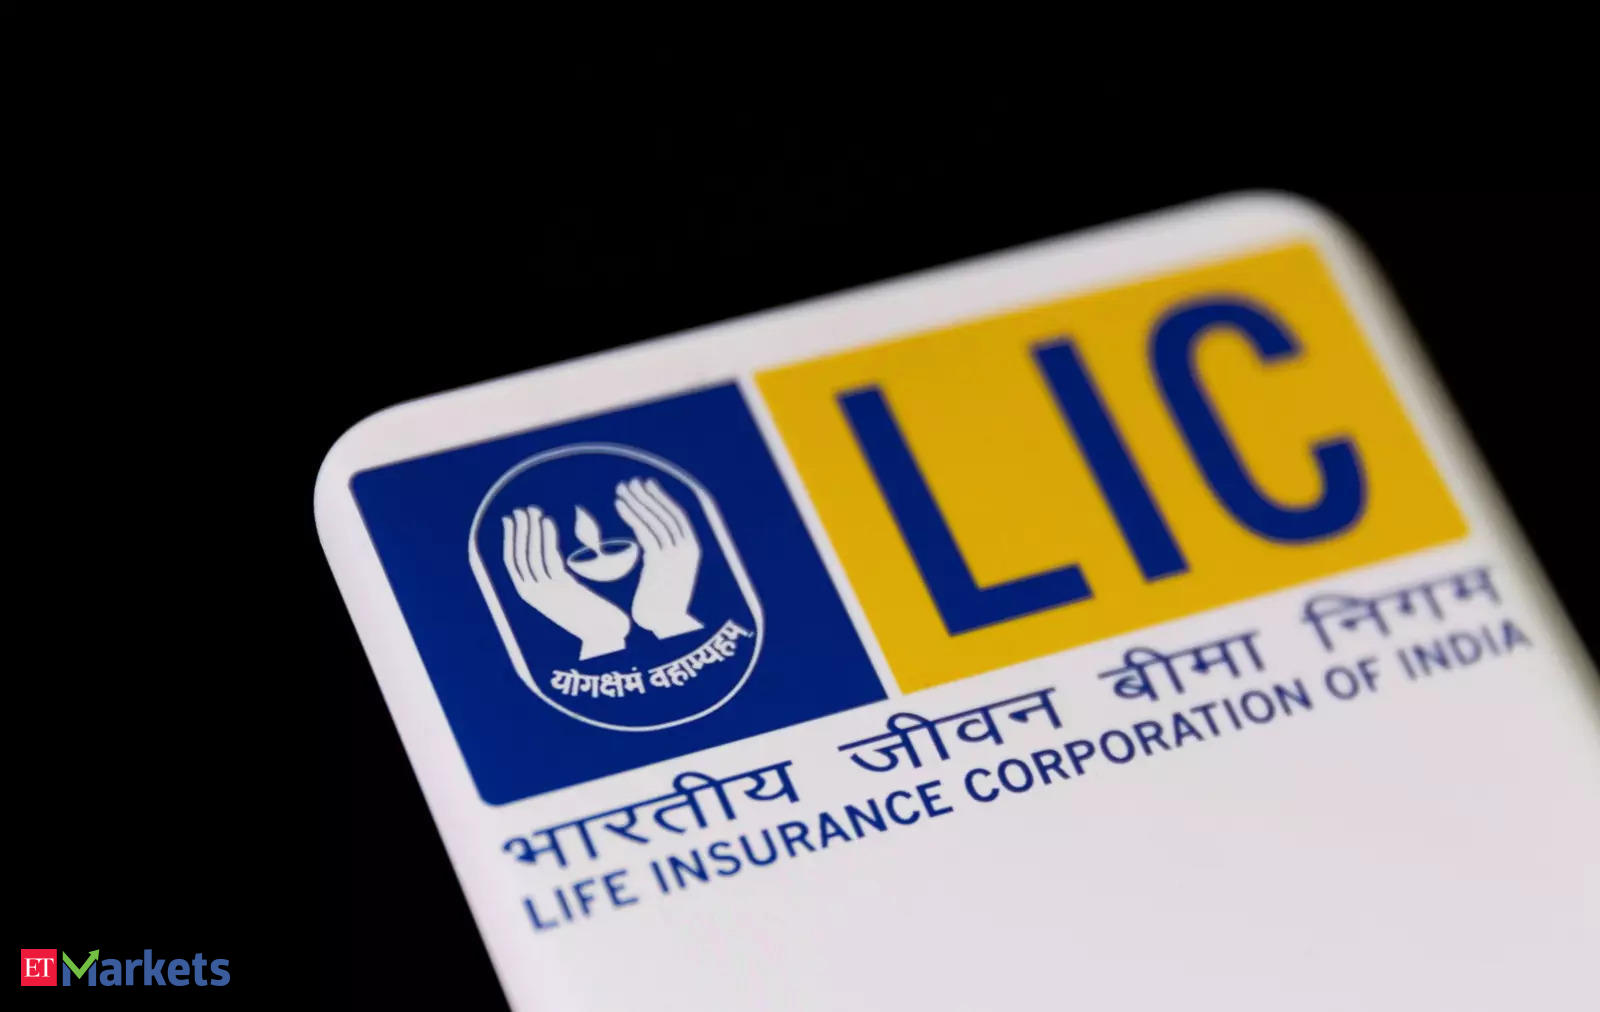 bata india stock: LIC raises stake in Bata India to 5.008% from ...